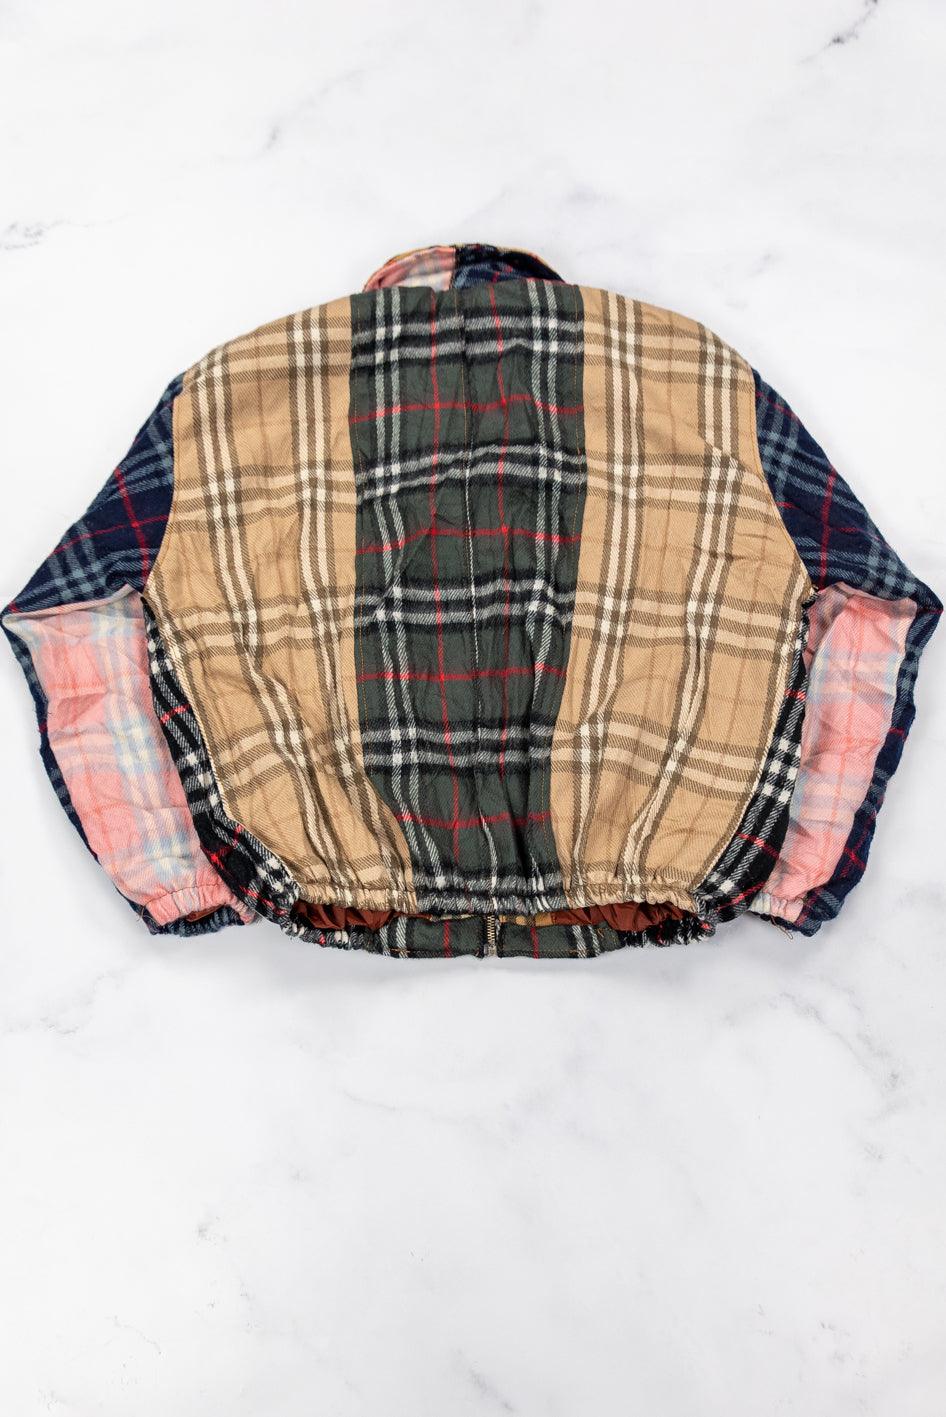 1 of 1 Reworked Jacket from Vintage Burberry Scarfs no26 - Dreambutdonotsleep